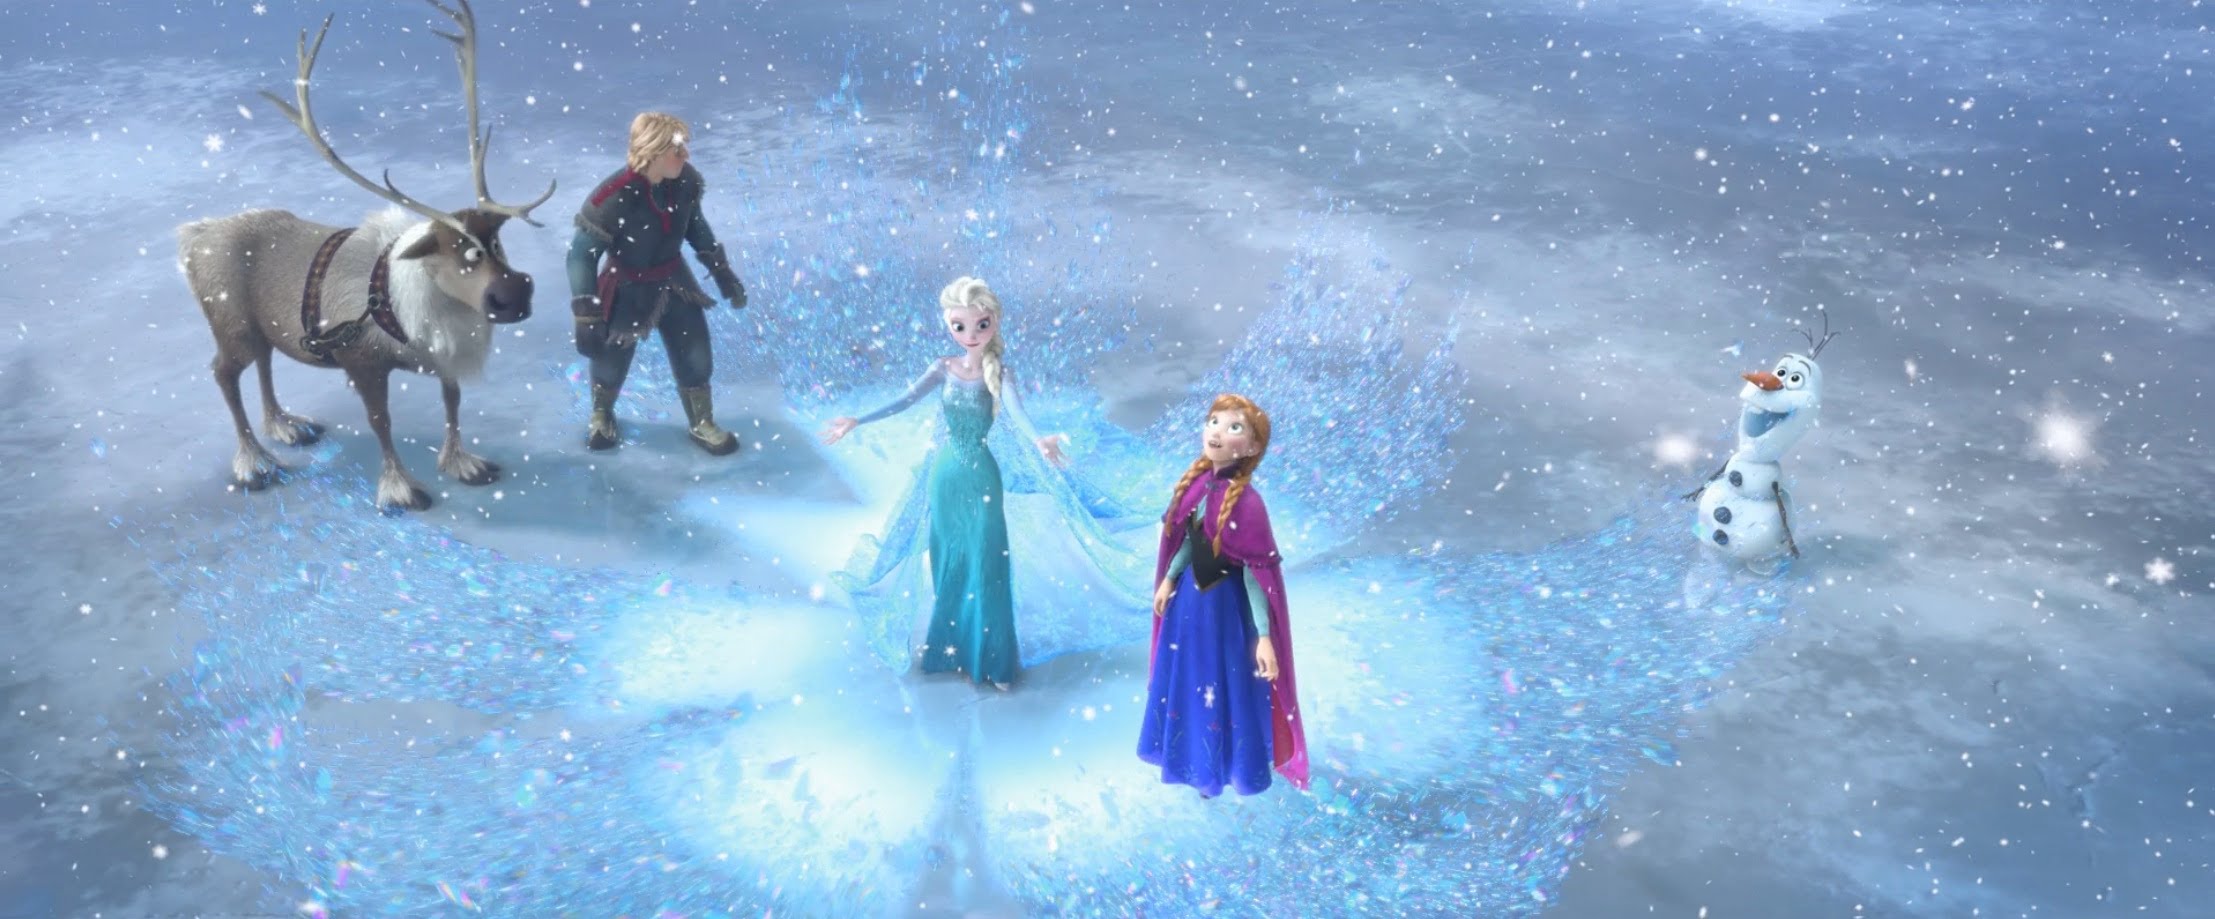 Disney's Frozen Holiday Trailer - YouTube